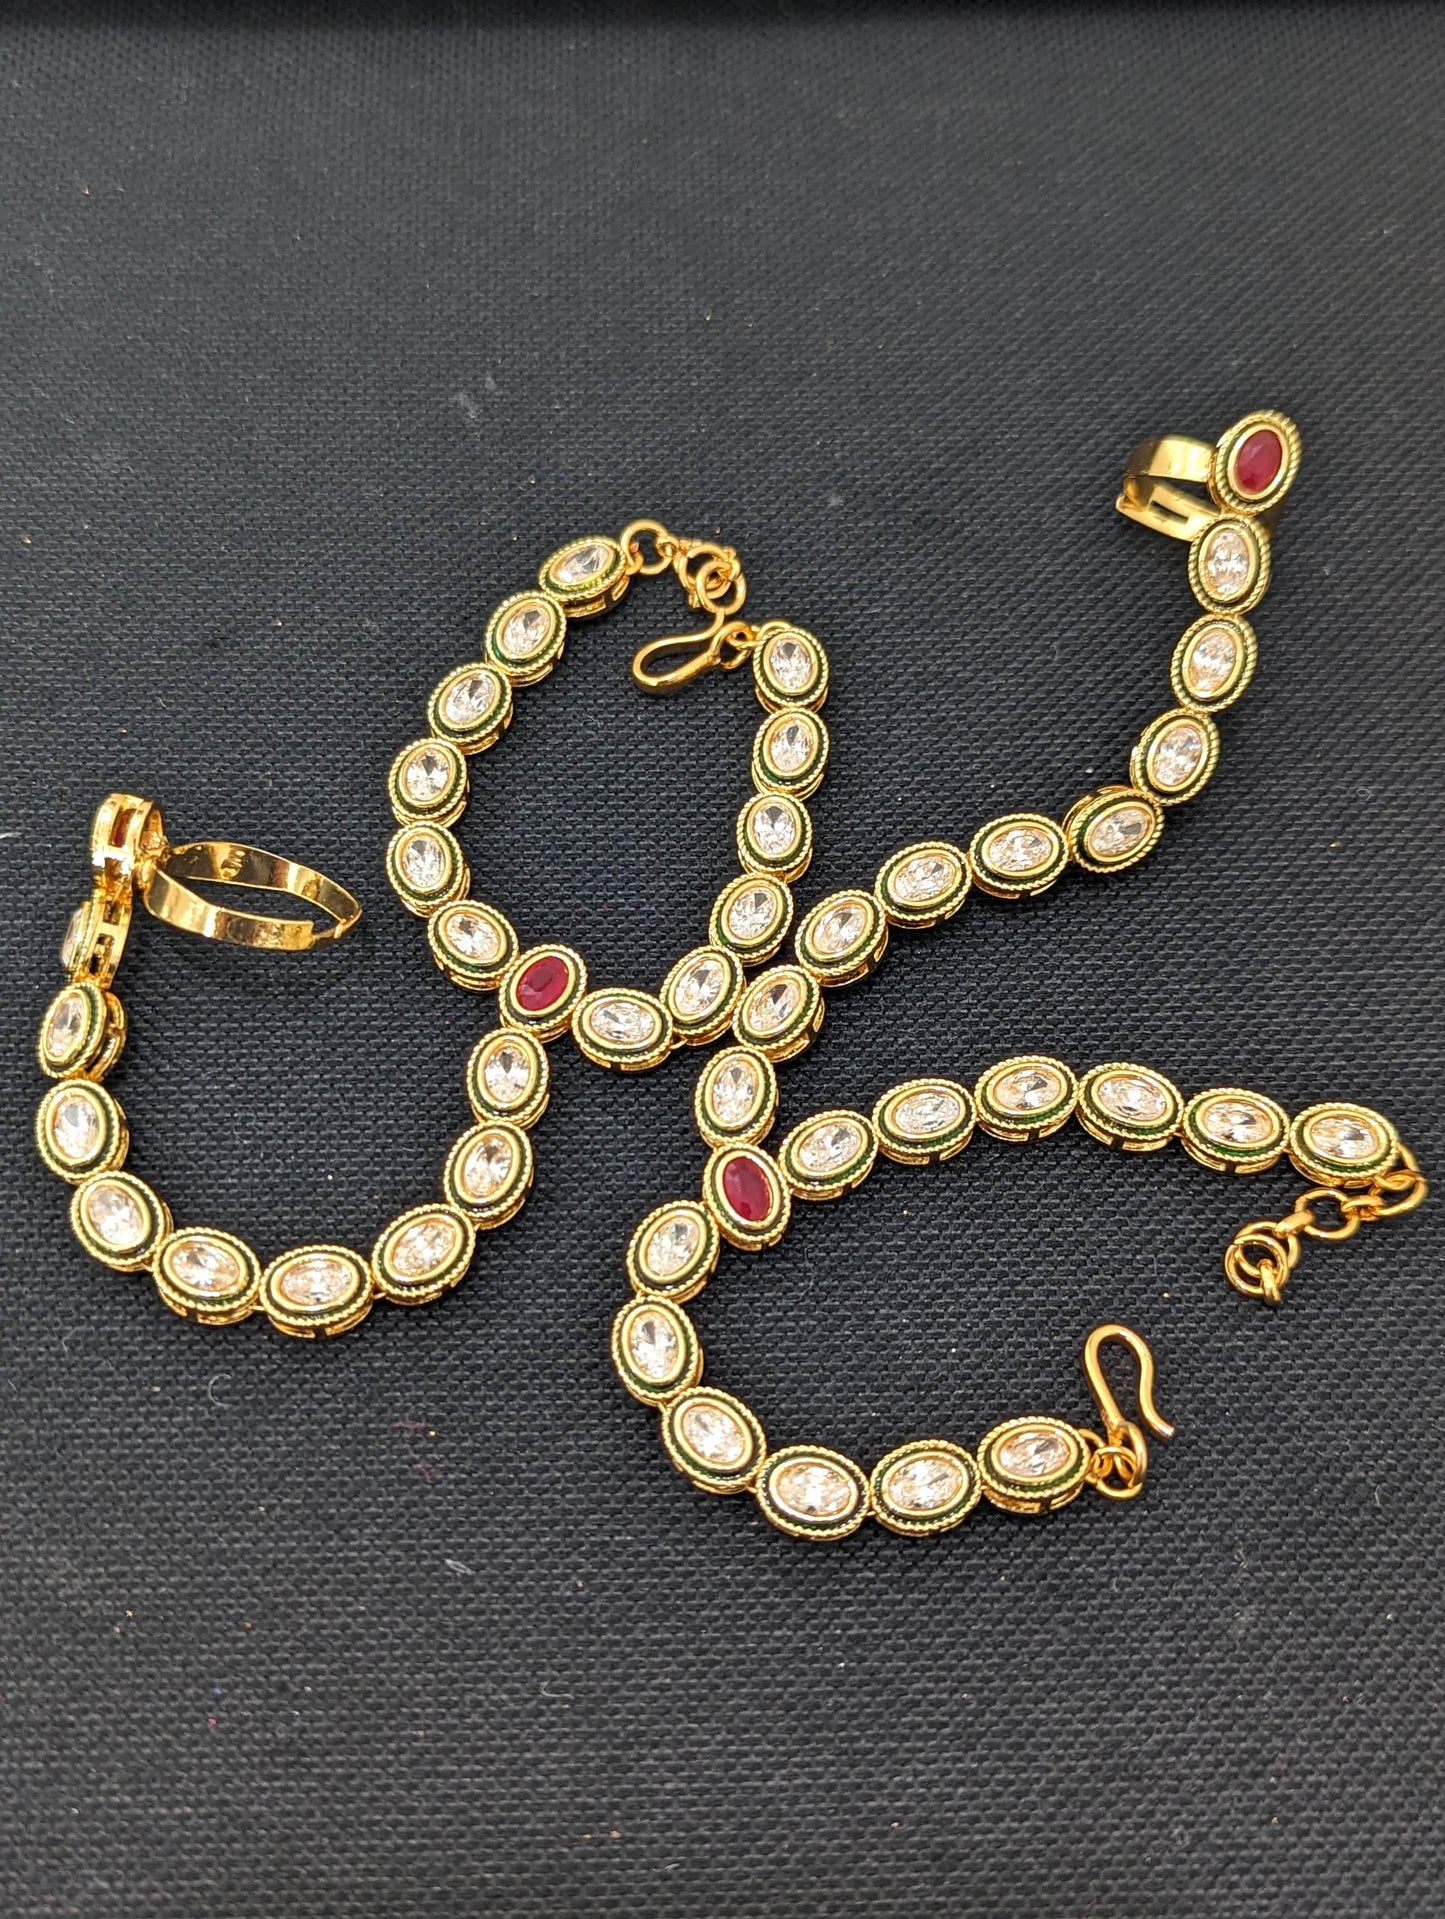 Polki Haath Phool / Bracelet Ring Combo / Ring Chain Bracelet / Indian Wedding Jewelry - D3